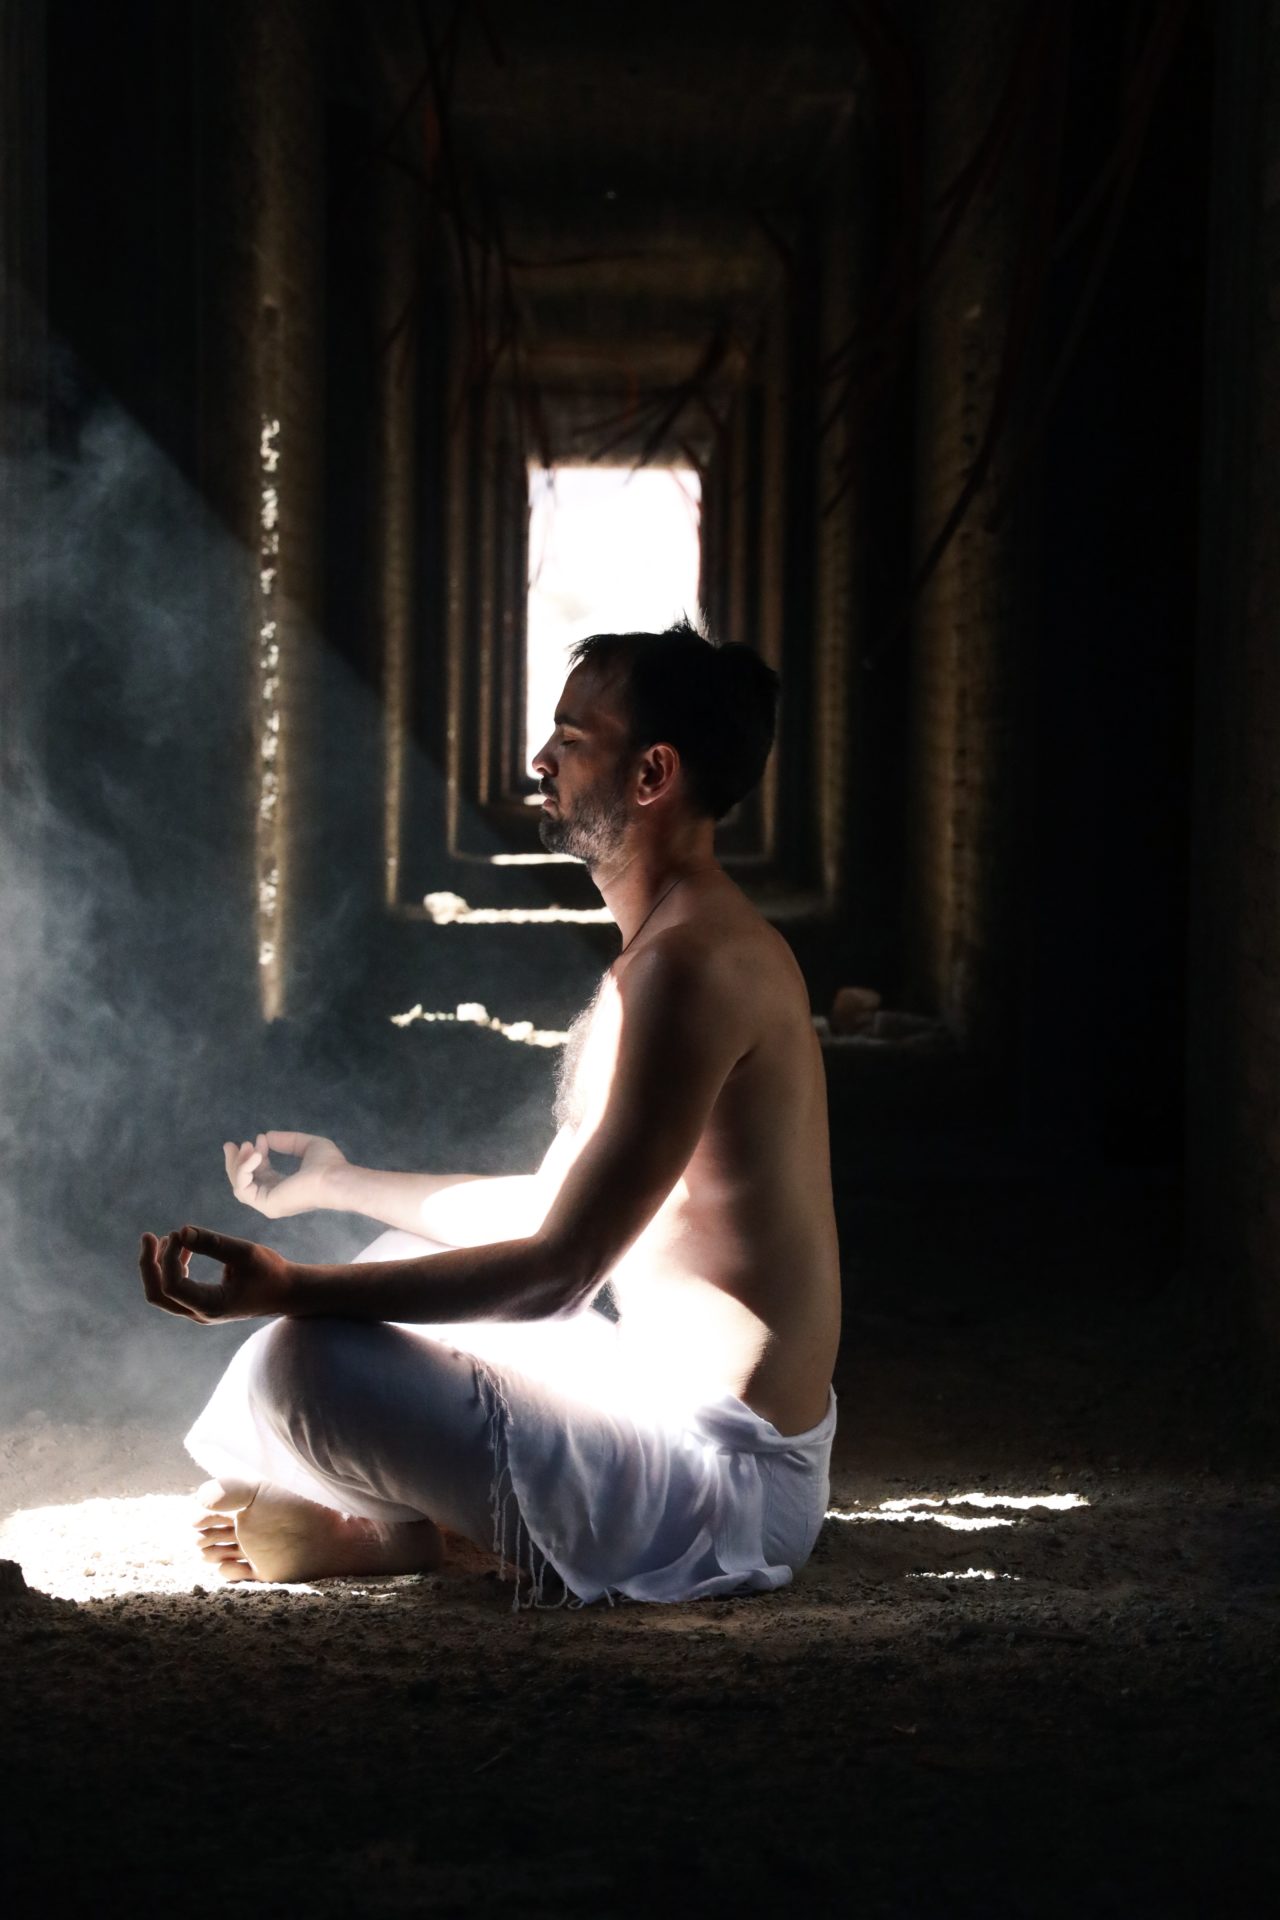 finding serenity through meditation